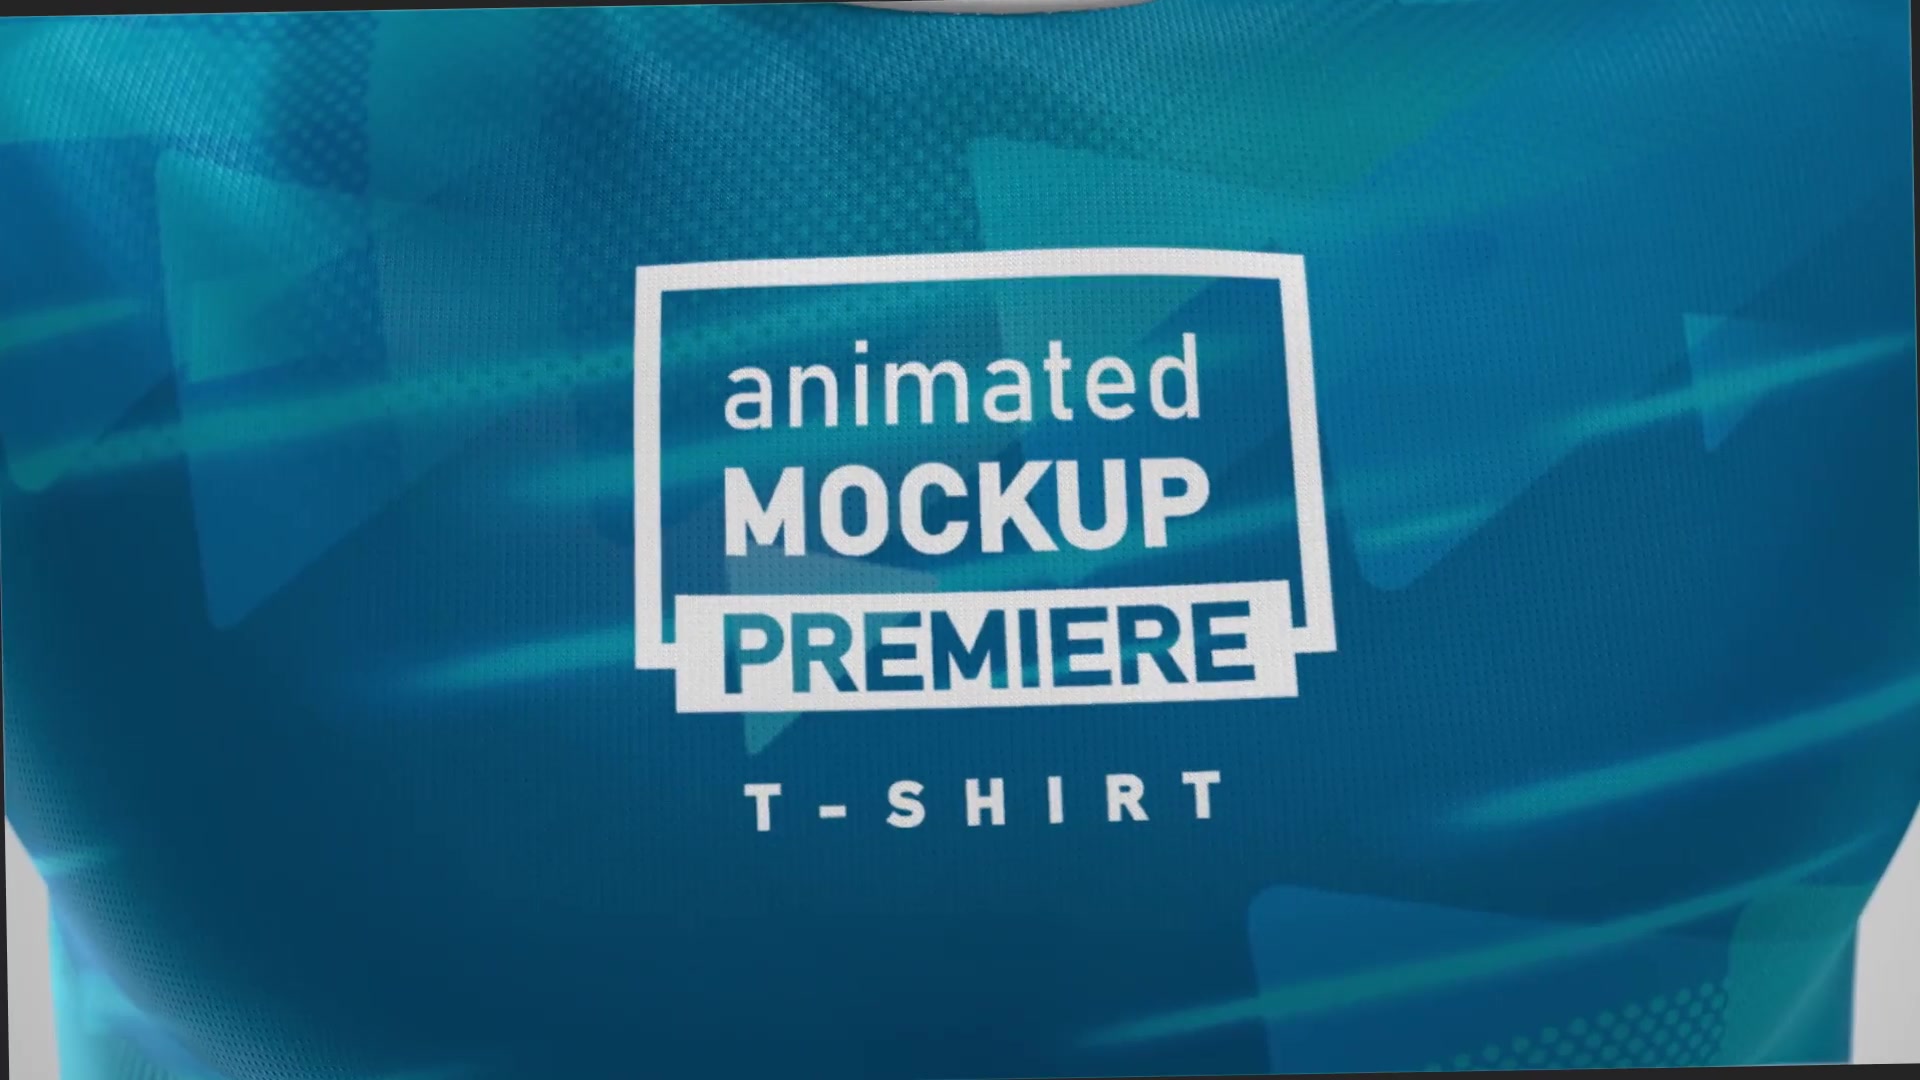 T shirt 5 Scenes Mockup Template Animated Mockup PREMIERE Videohive 33990164 Premiere Pro Image 3